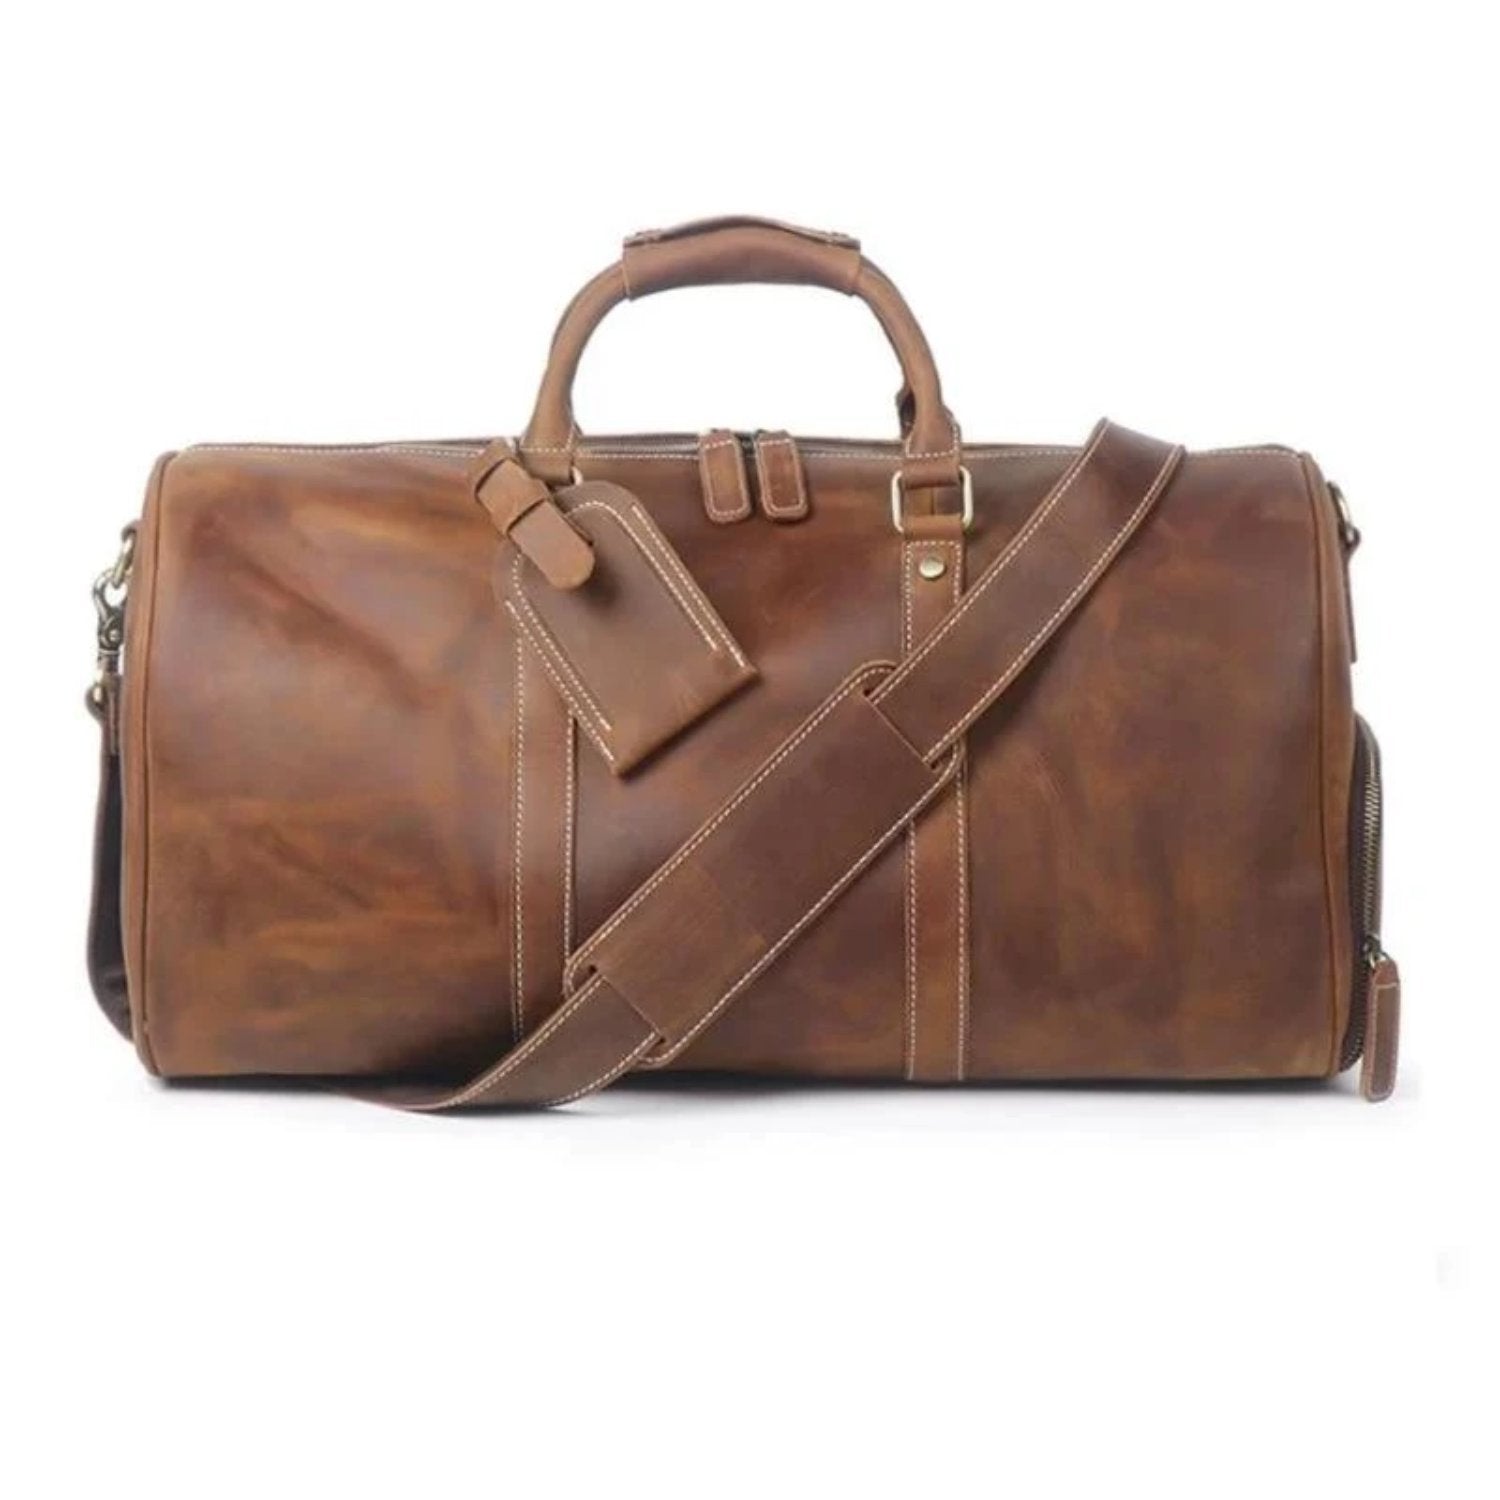 Full Grain Leather Duffle Bag | Vintage Leather Duffle Bag by Rustico - Cognac